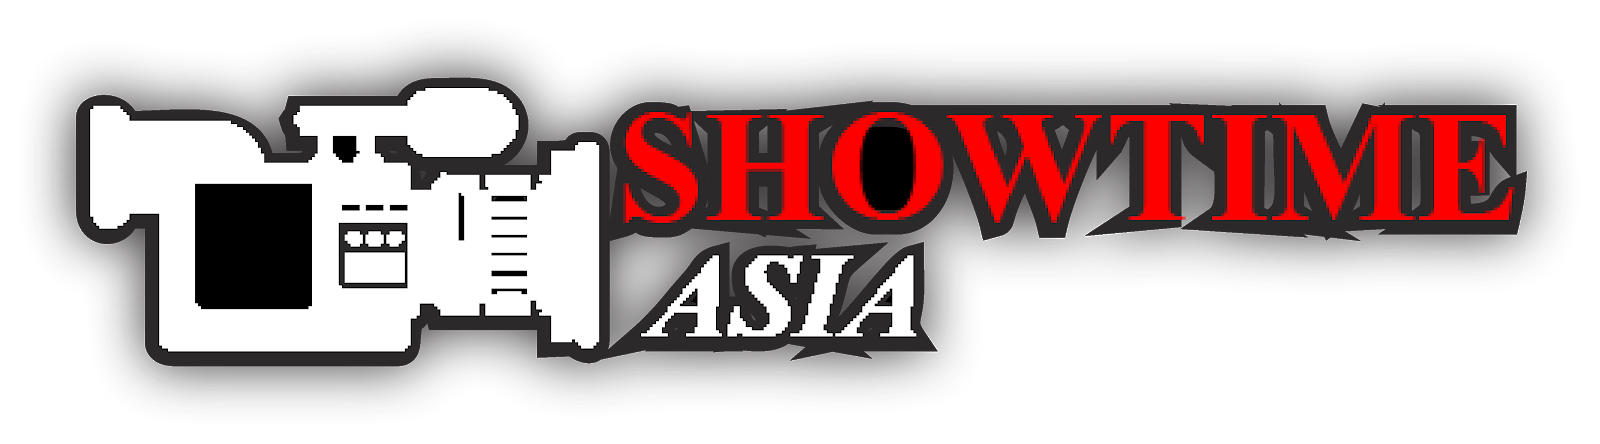 Showtime Asia